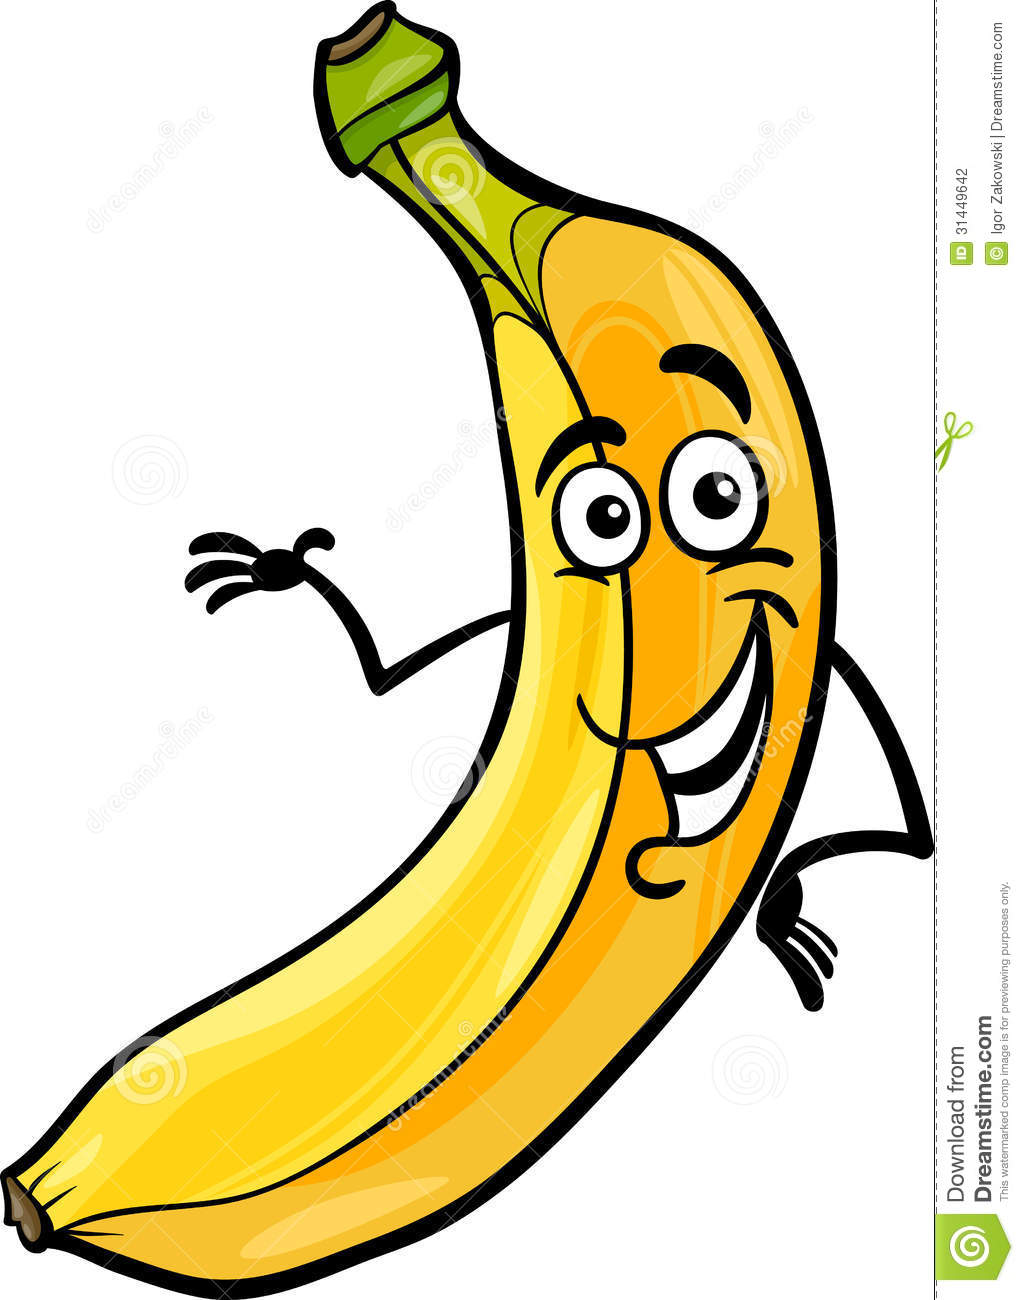 Funny Banana Fruit Cartoon Illustration Stock Photography   Image